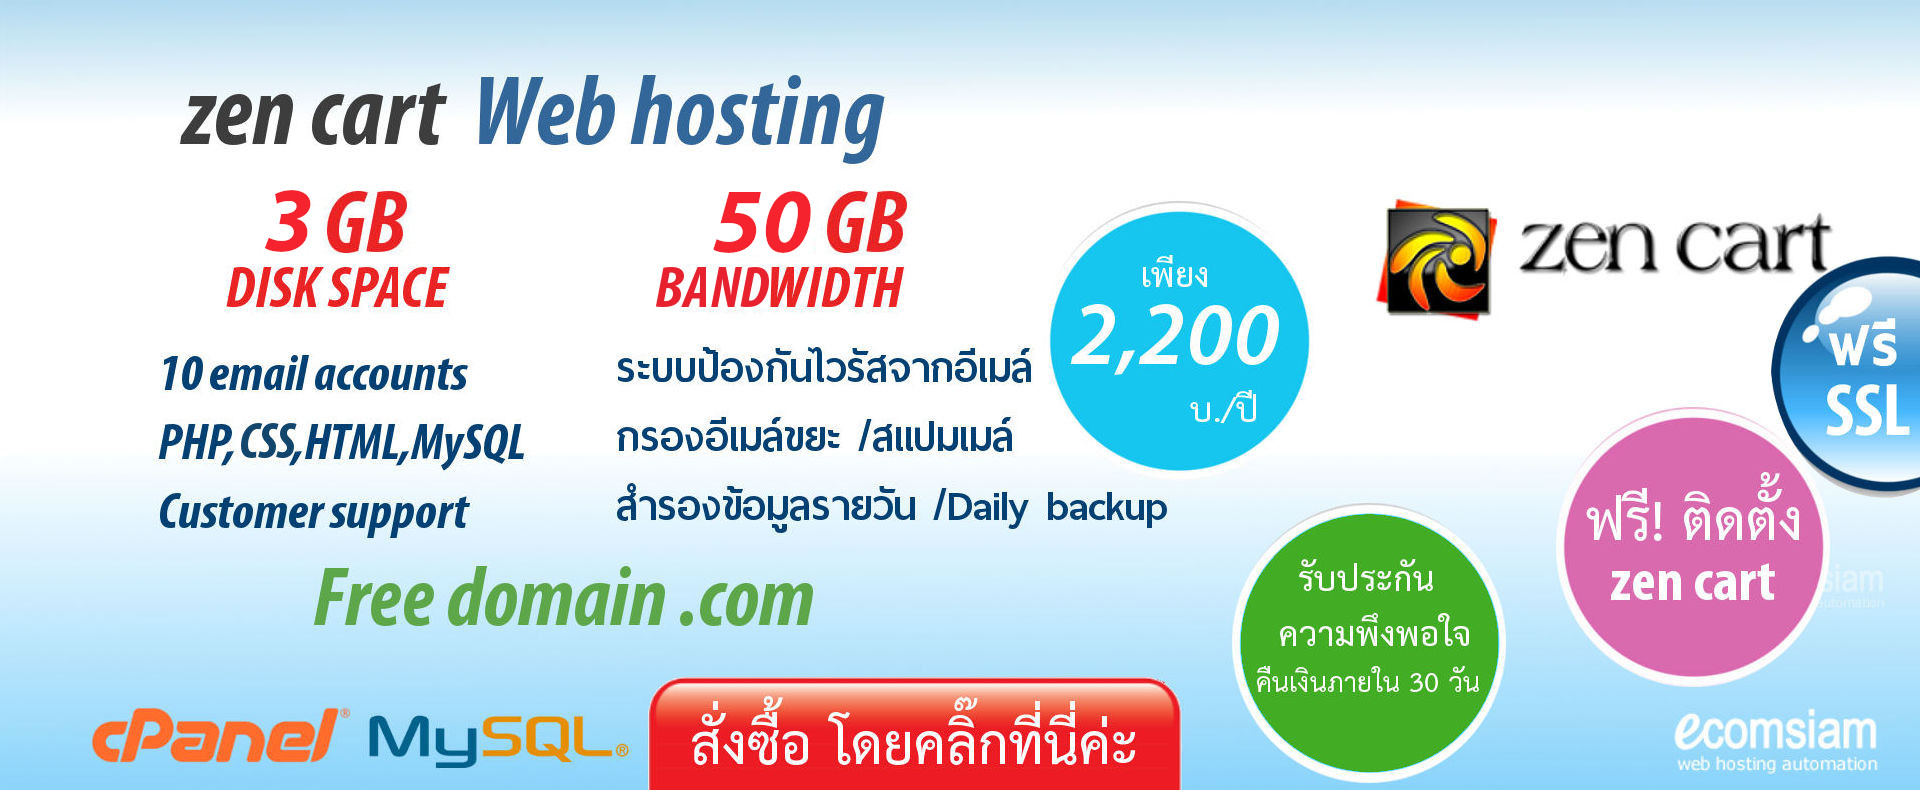 web hosting thailand แนะนำ zencart shopping cart  ฟรีโดเมน ฟรี SSL เว็บโฮสติ้งไทย ราคาเบาๆ เริ่มต้นเพียง 2200 บาทต่อปี